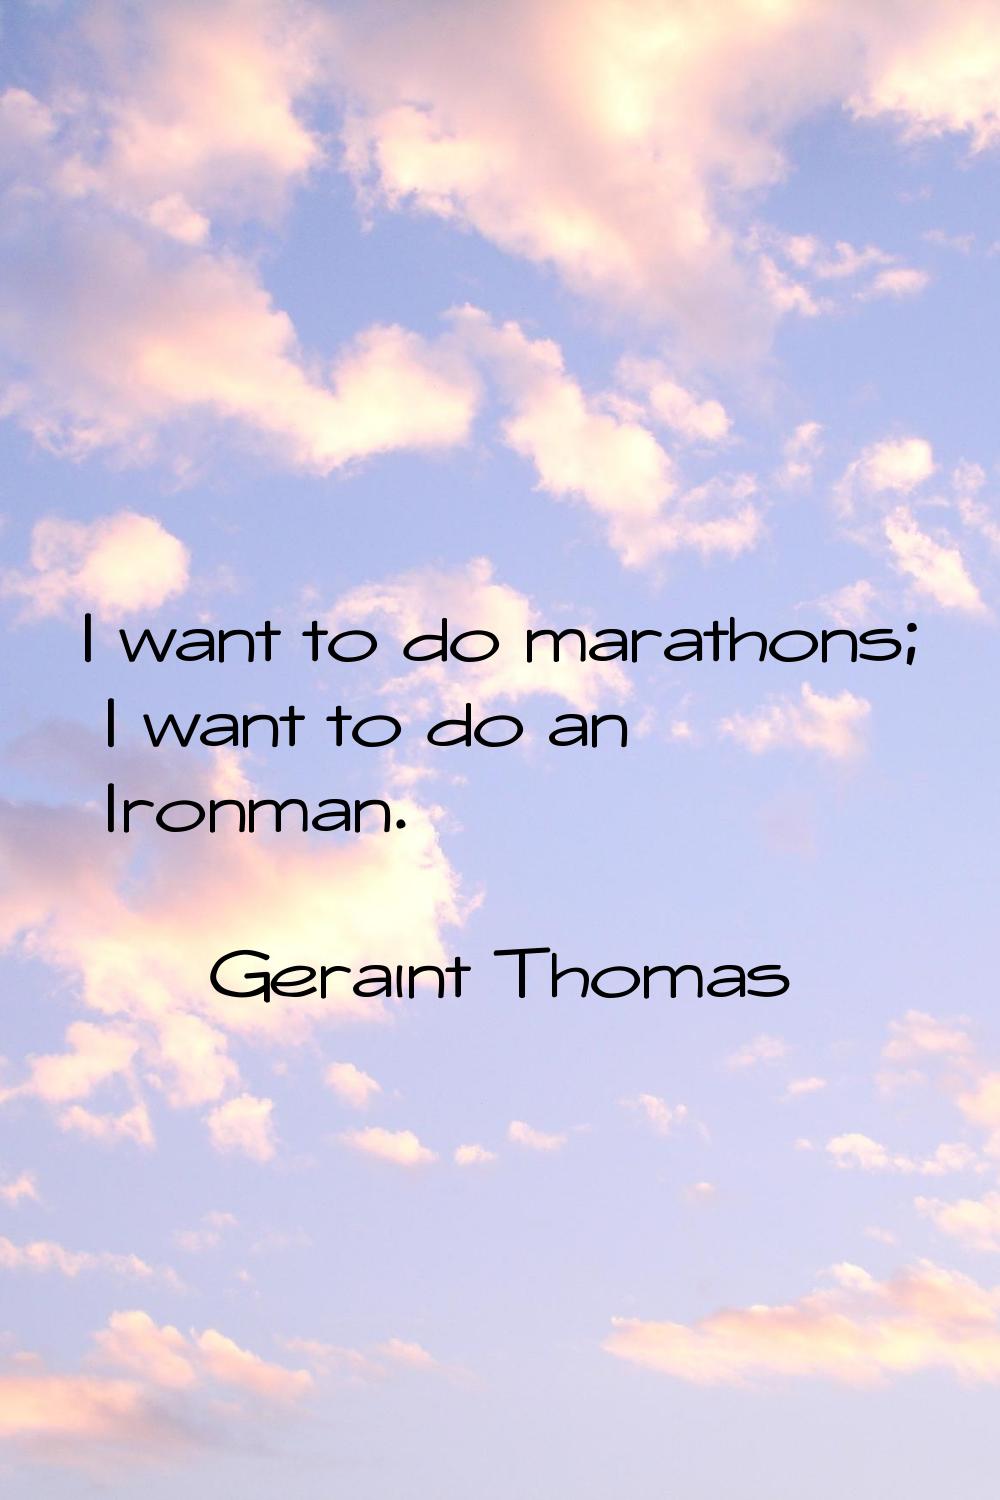 I want to do marathons; I want to do an Ironman.